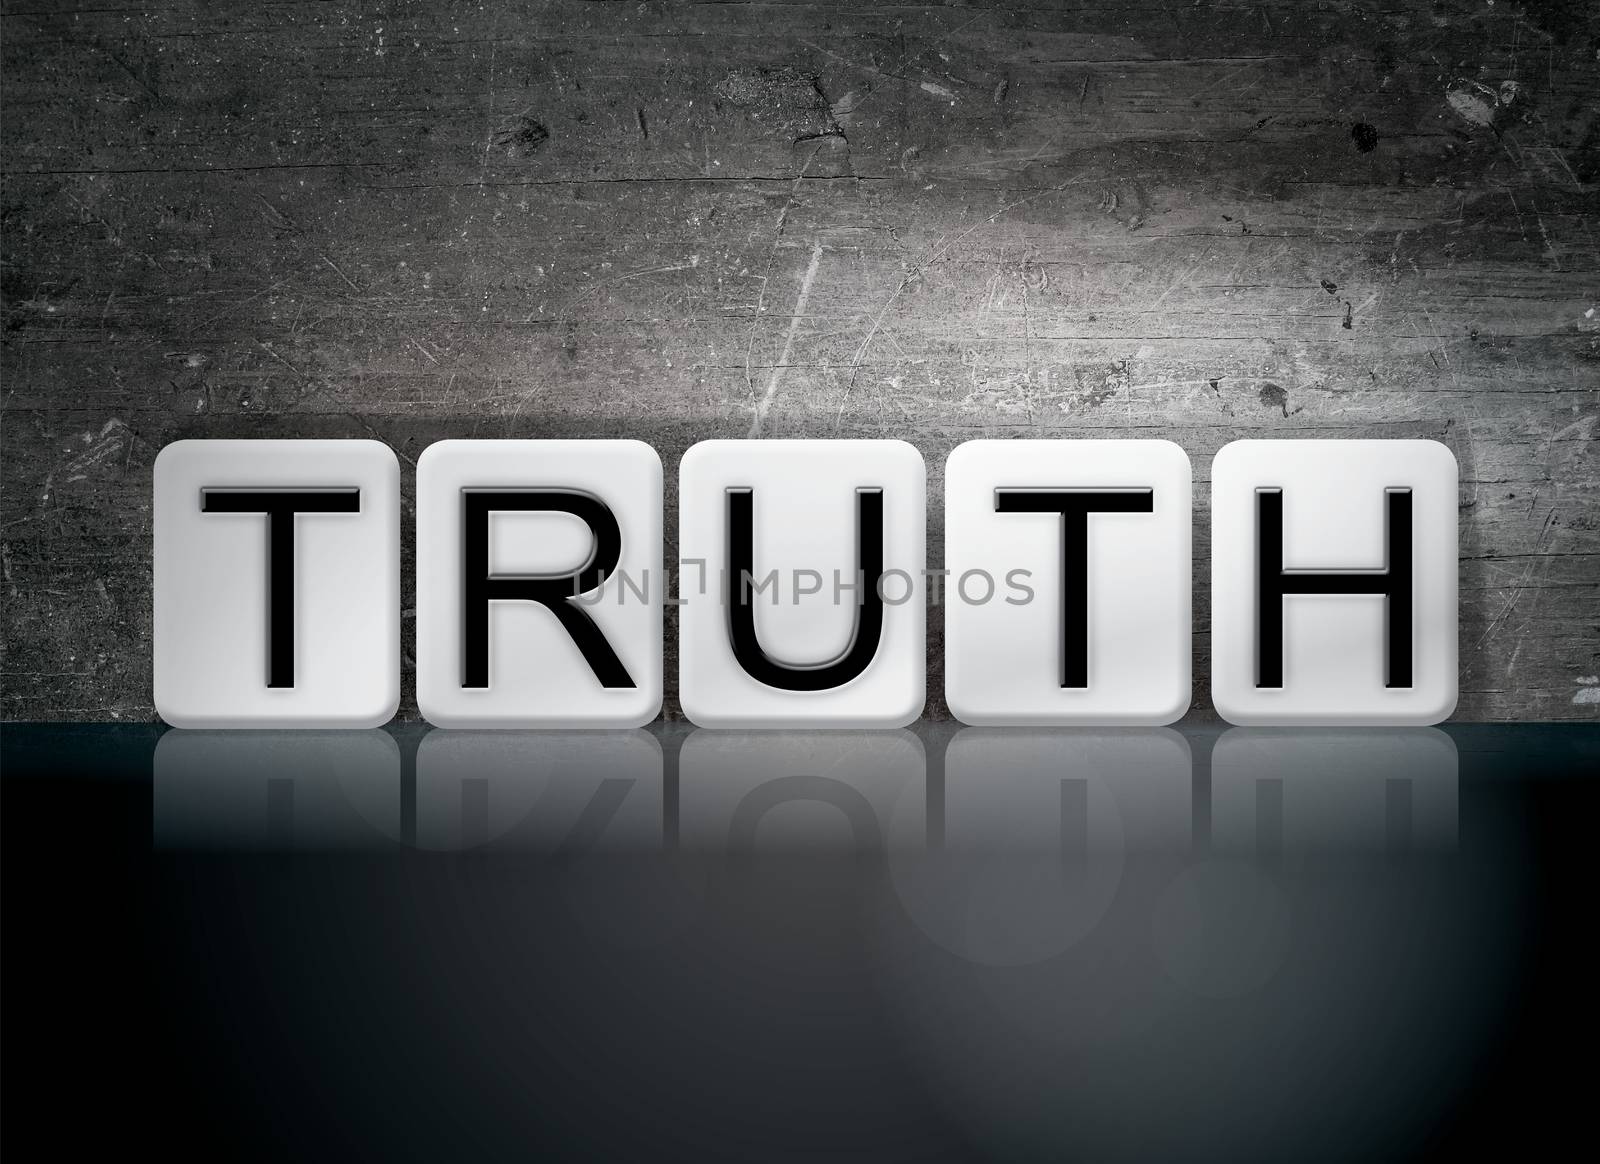 The word "Truth" written in white tiles against a dark vintage grunge background.